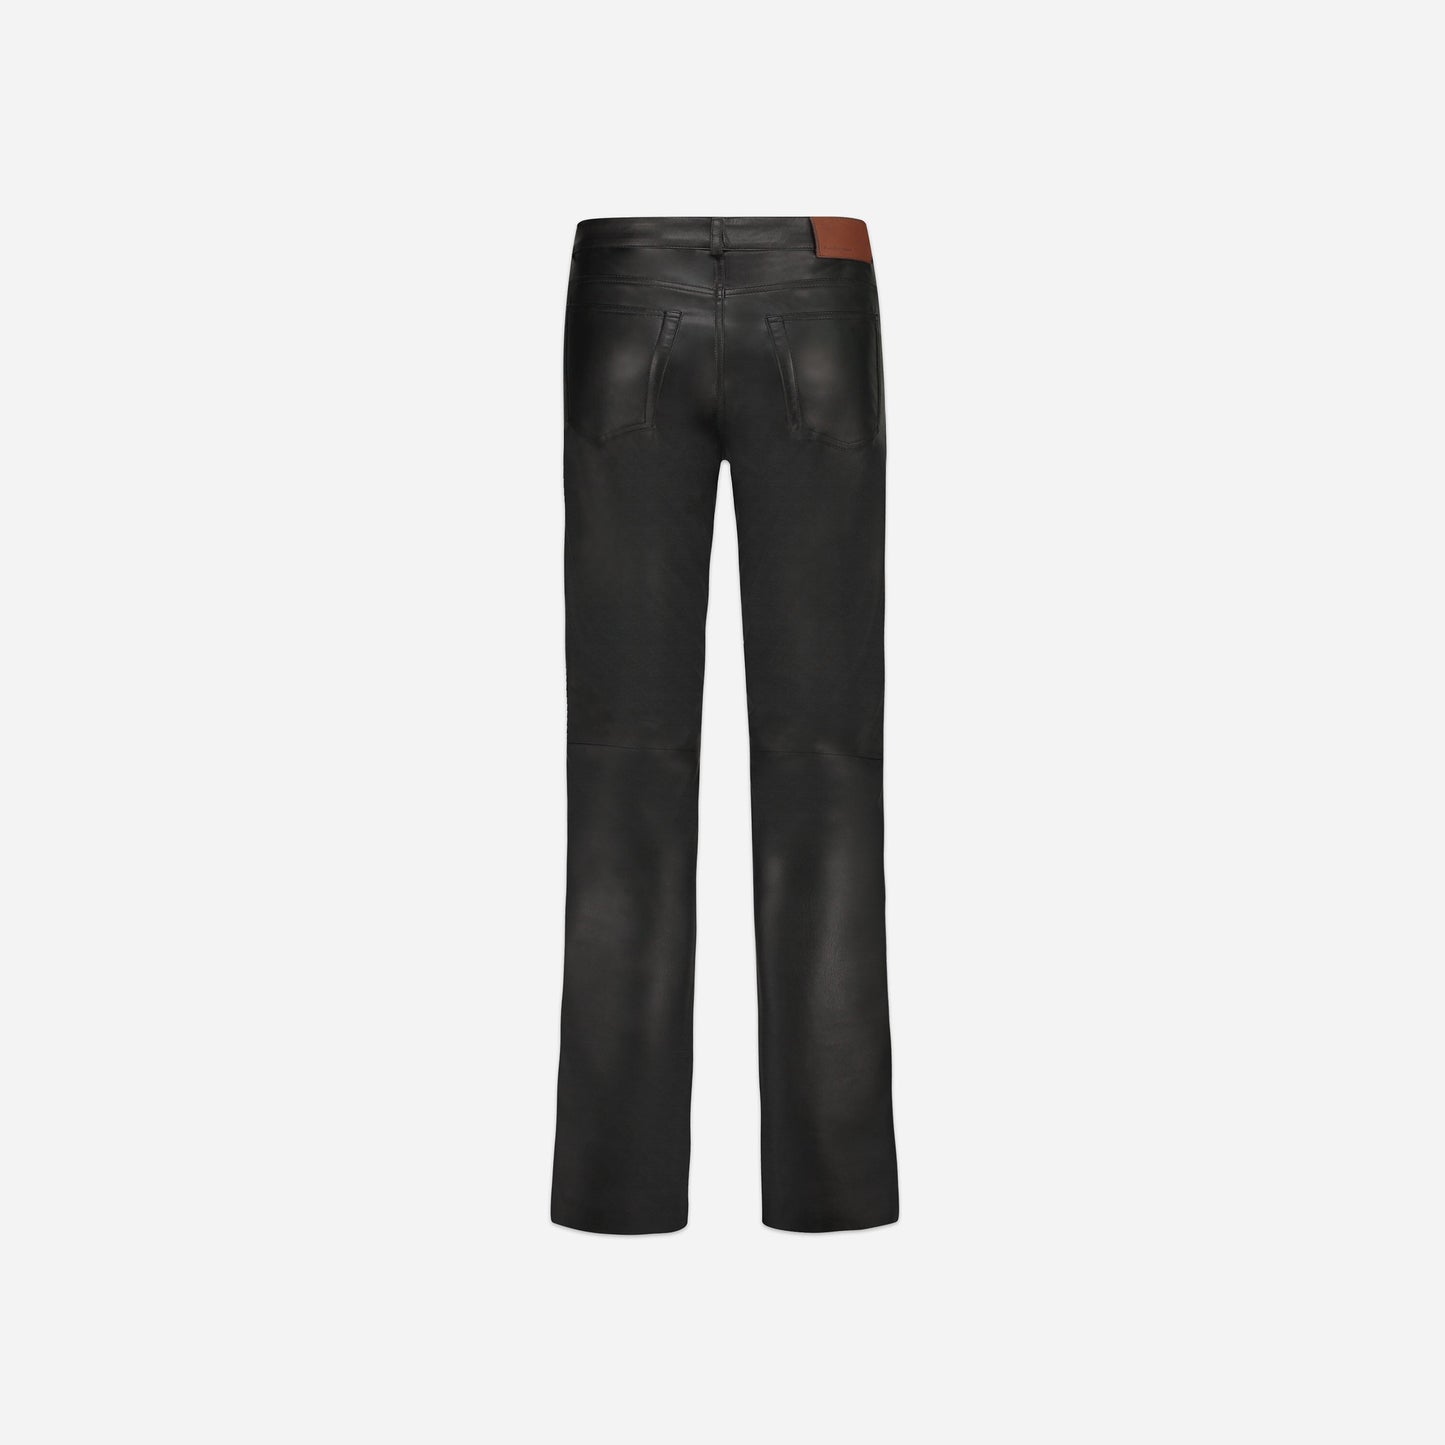 Flared Vegan Leather Pantalon in Black